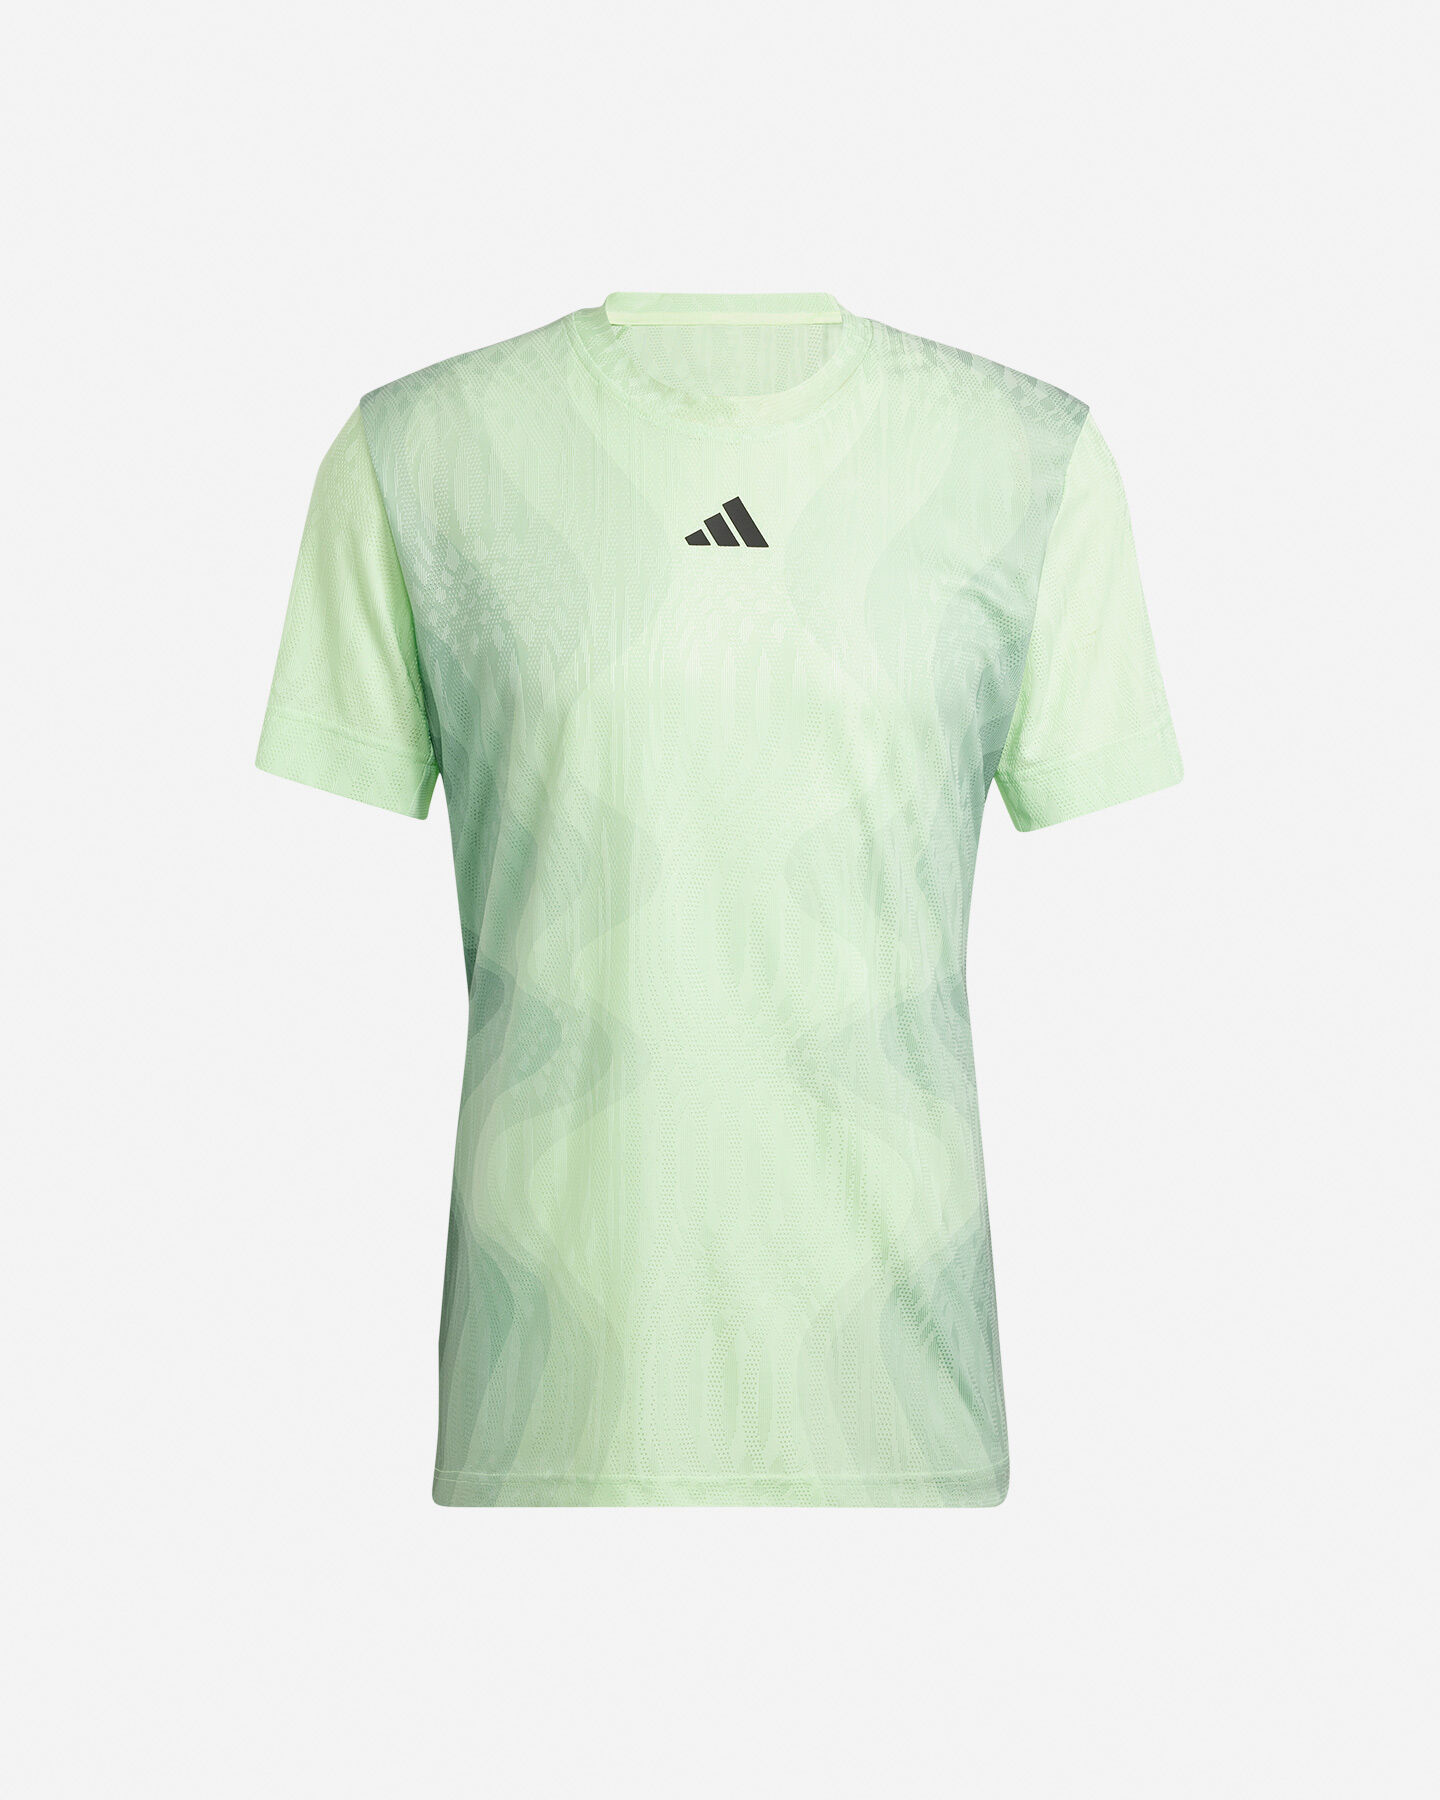  T-Shirt tennis ADIDAS AO23 AUGER M S5690179|UNI|M scatto 0